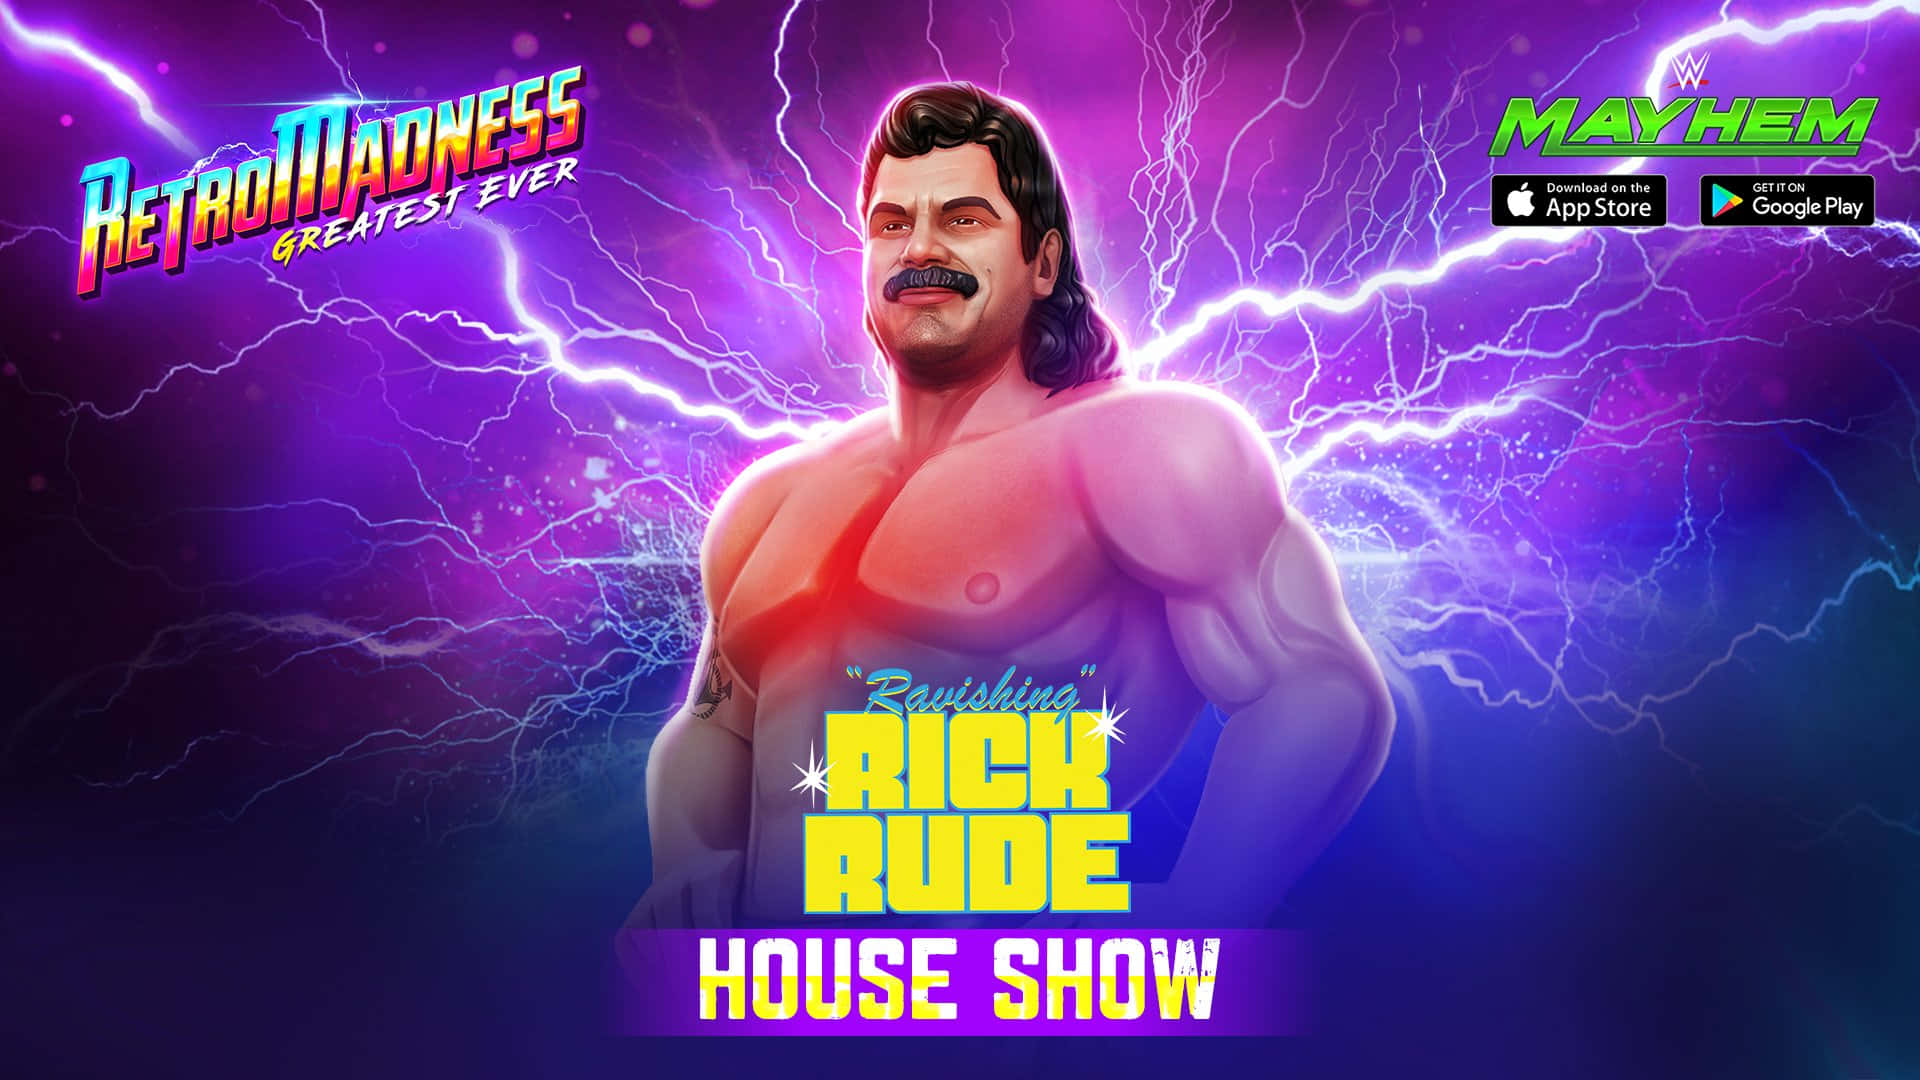 Hent Rick Rude WWE Mayhem Mobile Game Wallpaper